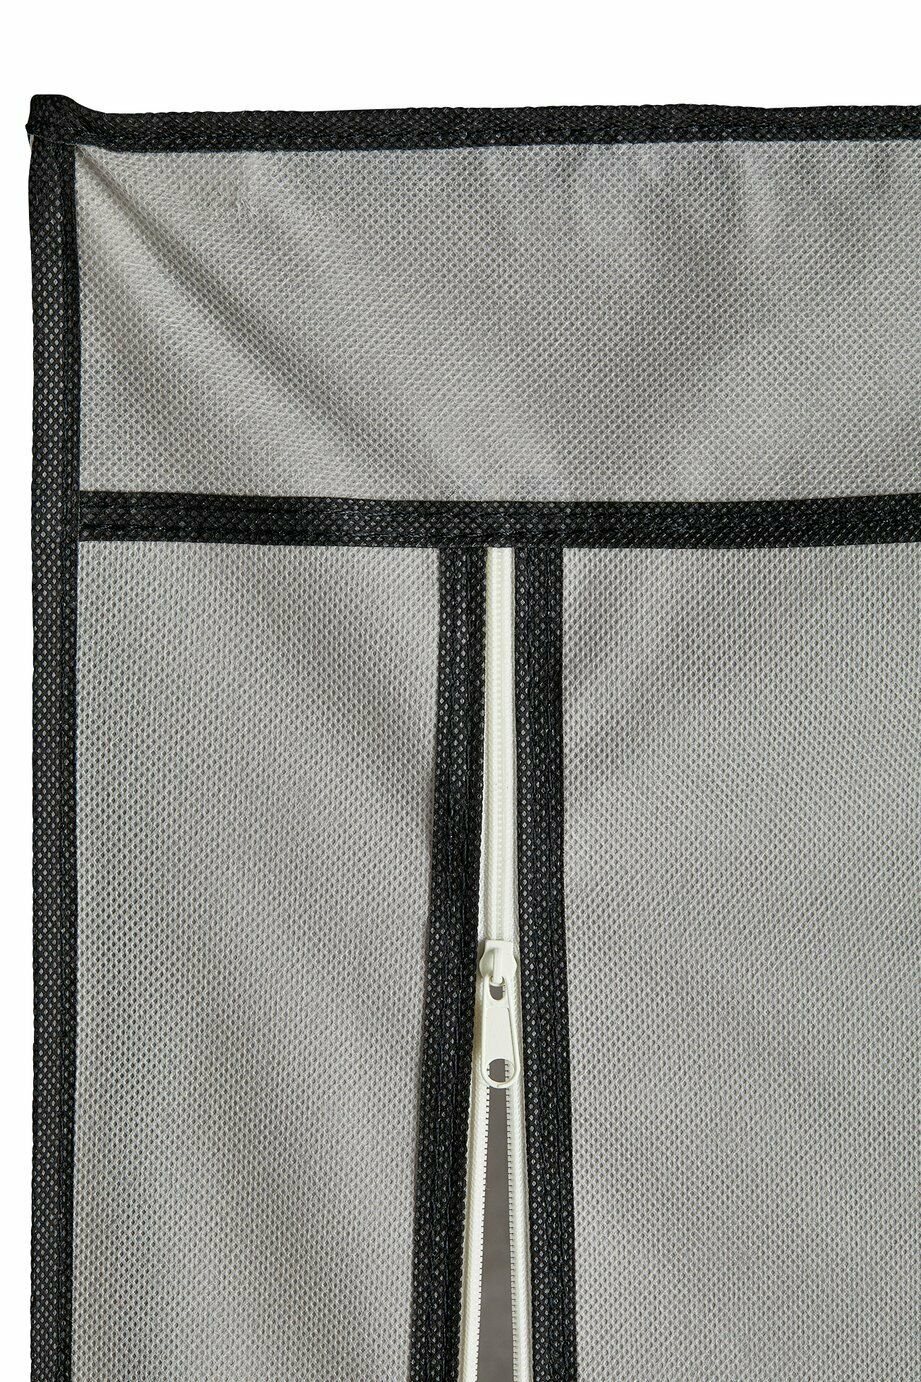 Home Triple Modular Fabric Wardrobe - Grey & Black